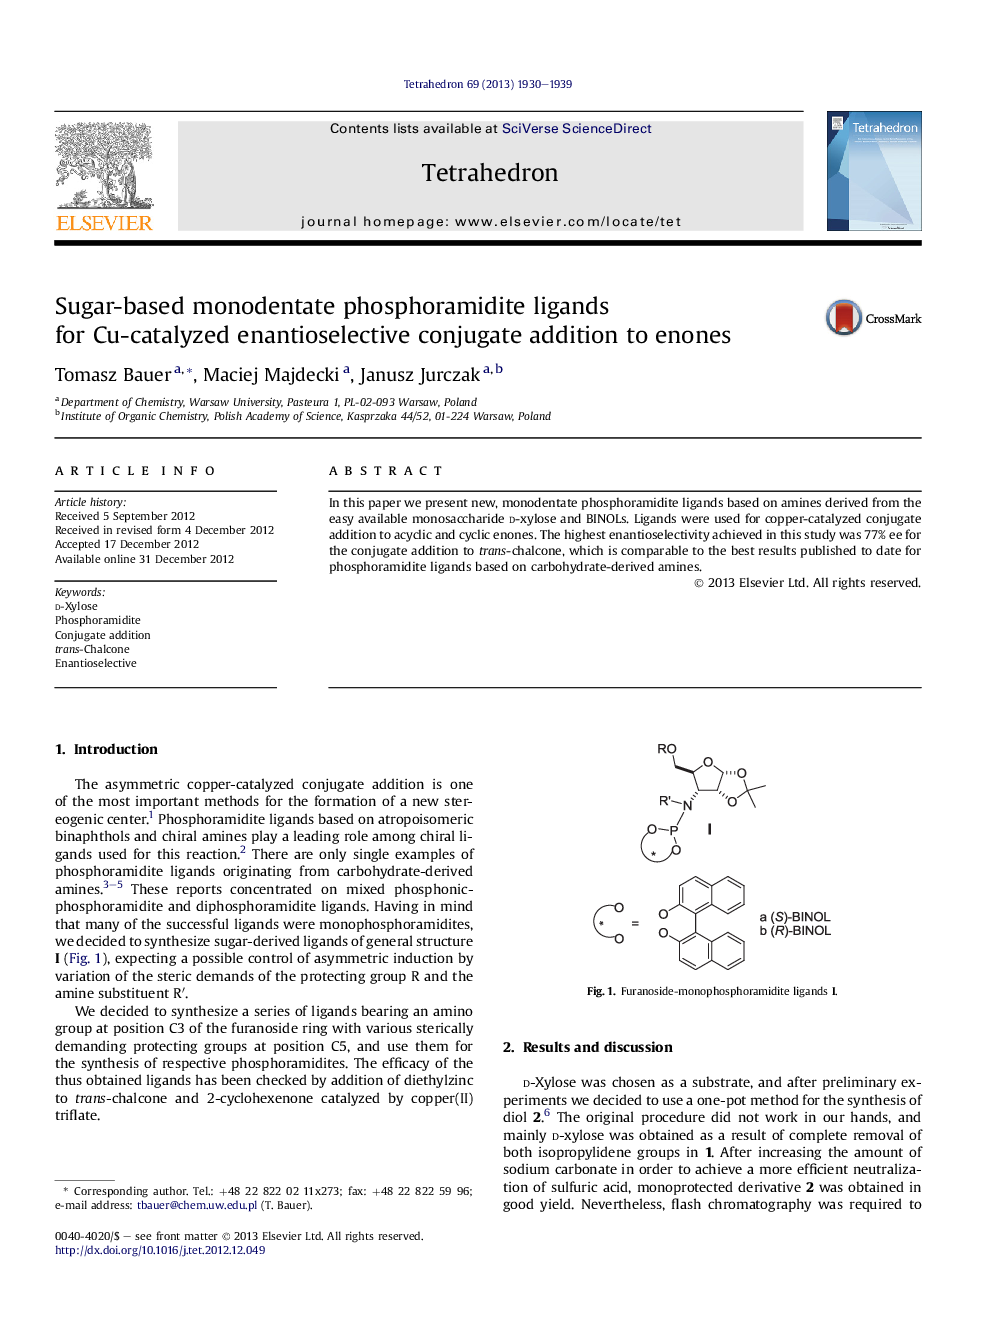 Sugar-based monodentate phosphoramidite ligands for Cu-catalyzed enantioselective conjugate addition to enones